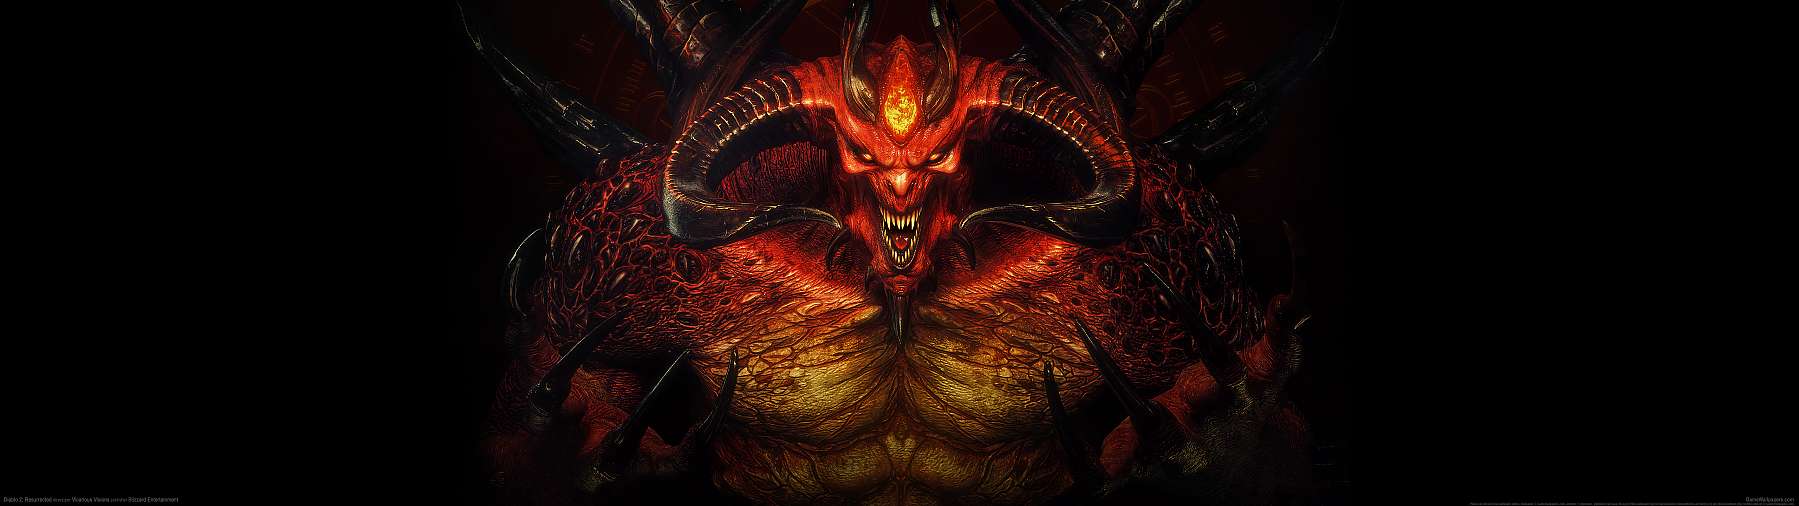 Diablo 2: Resurrected superwide wallpaper or background 05